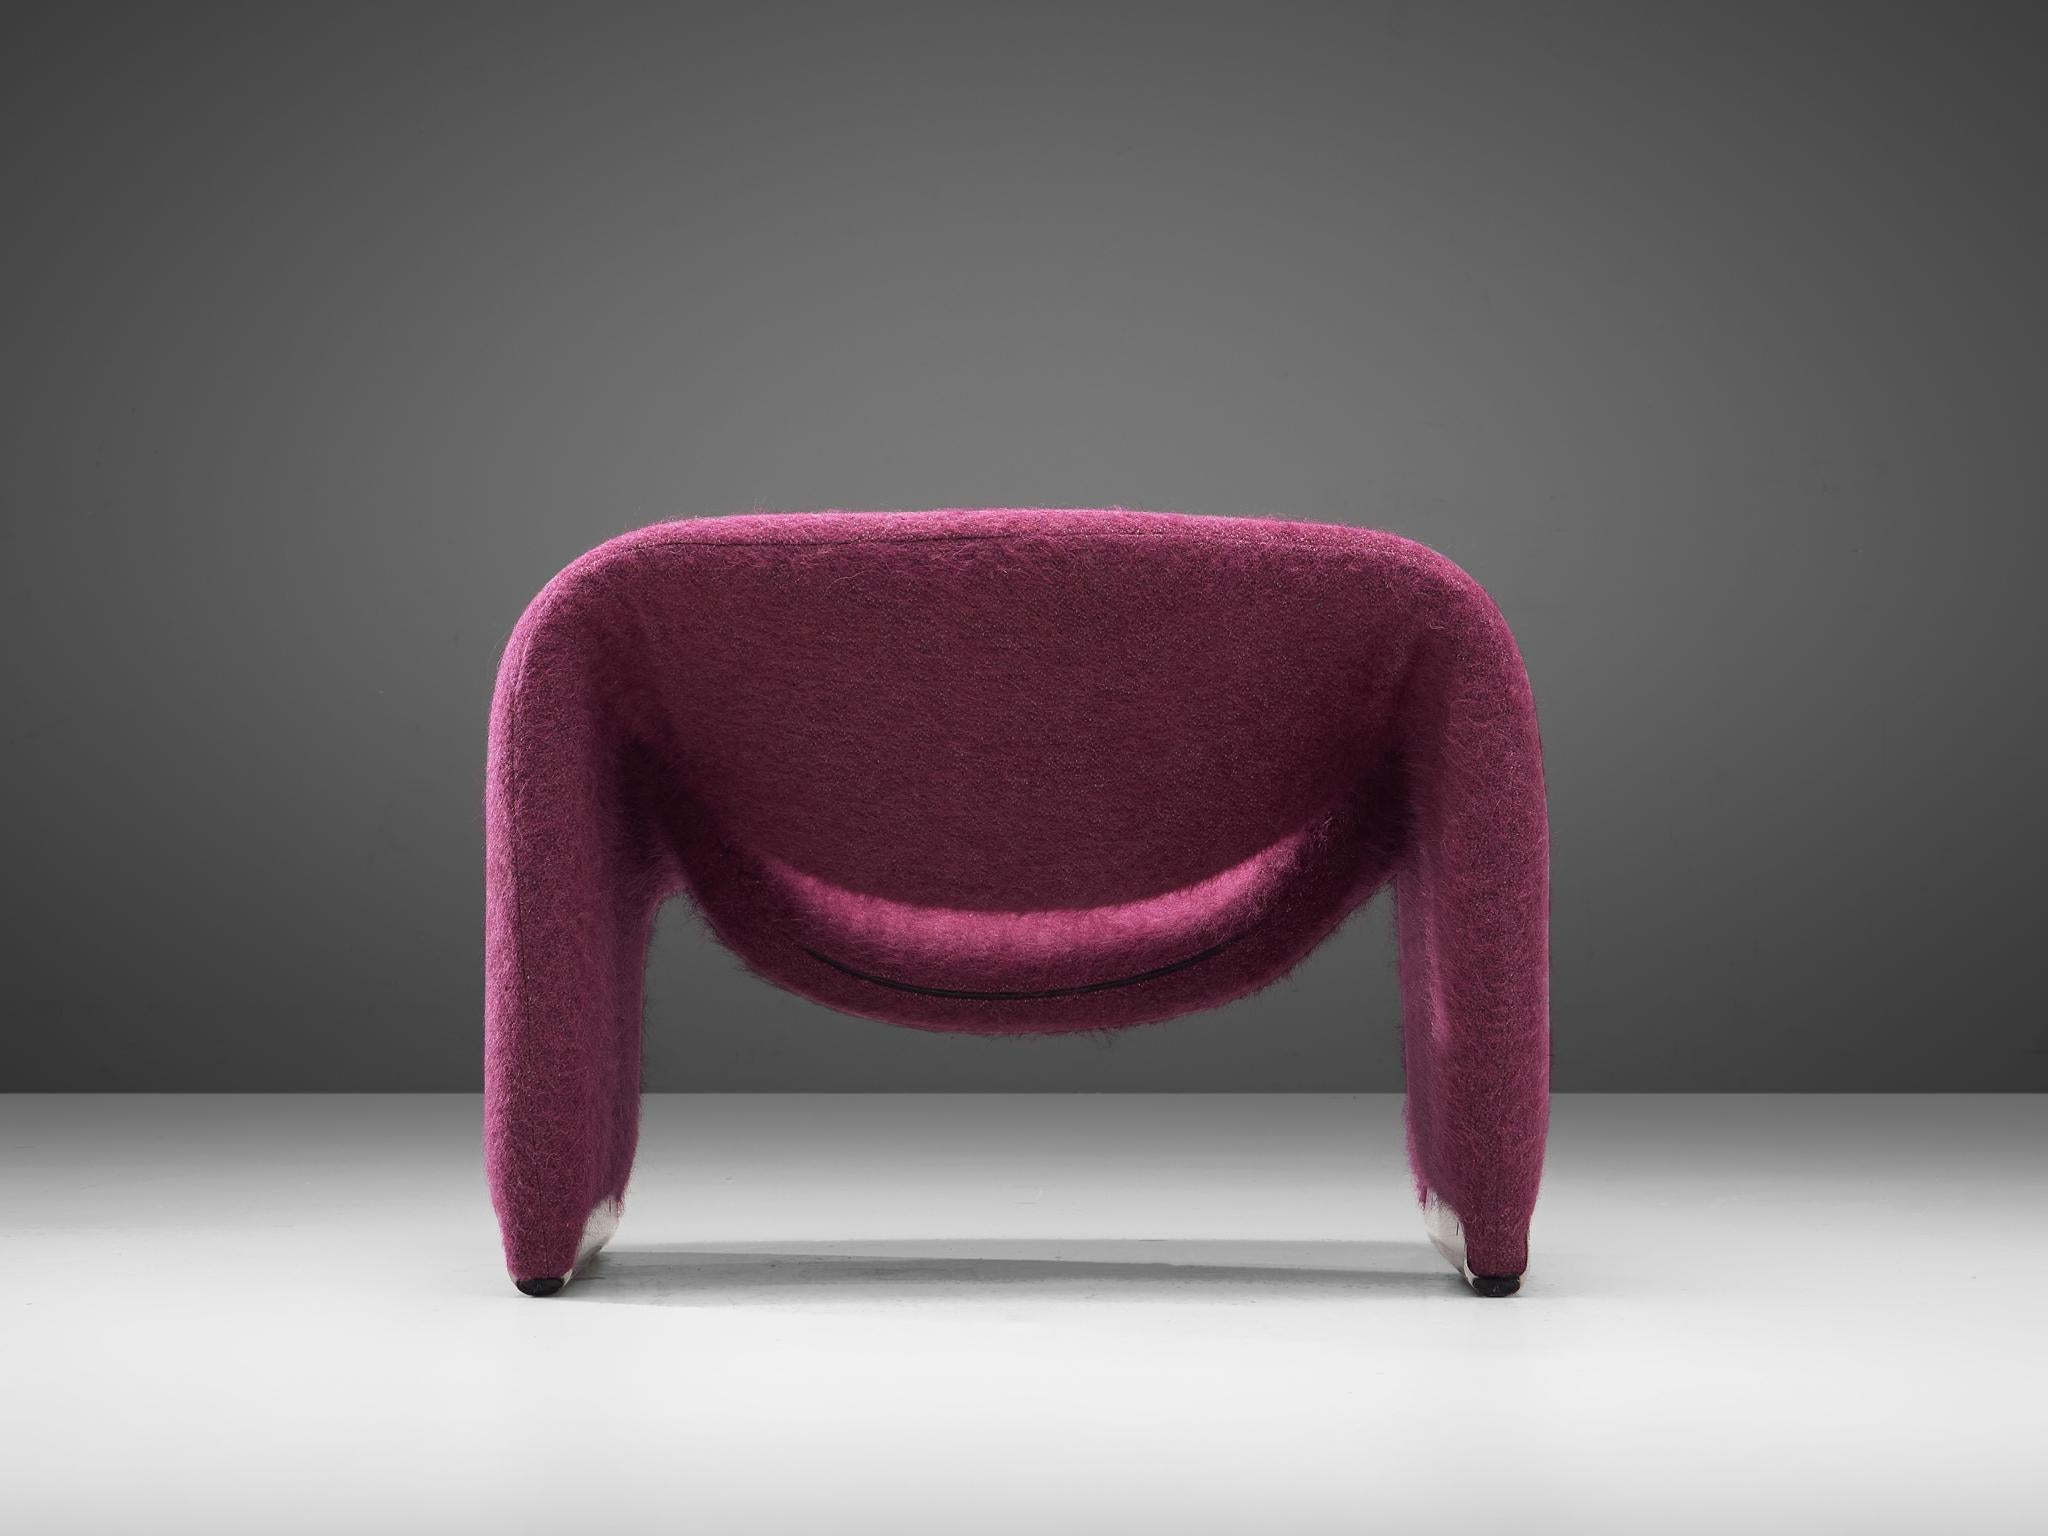 Post-Modern Pierre Paulin 'Groovy' Lounge Chairs Customizable in Pierre Frey Wool Upholstery